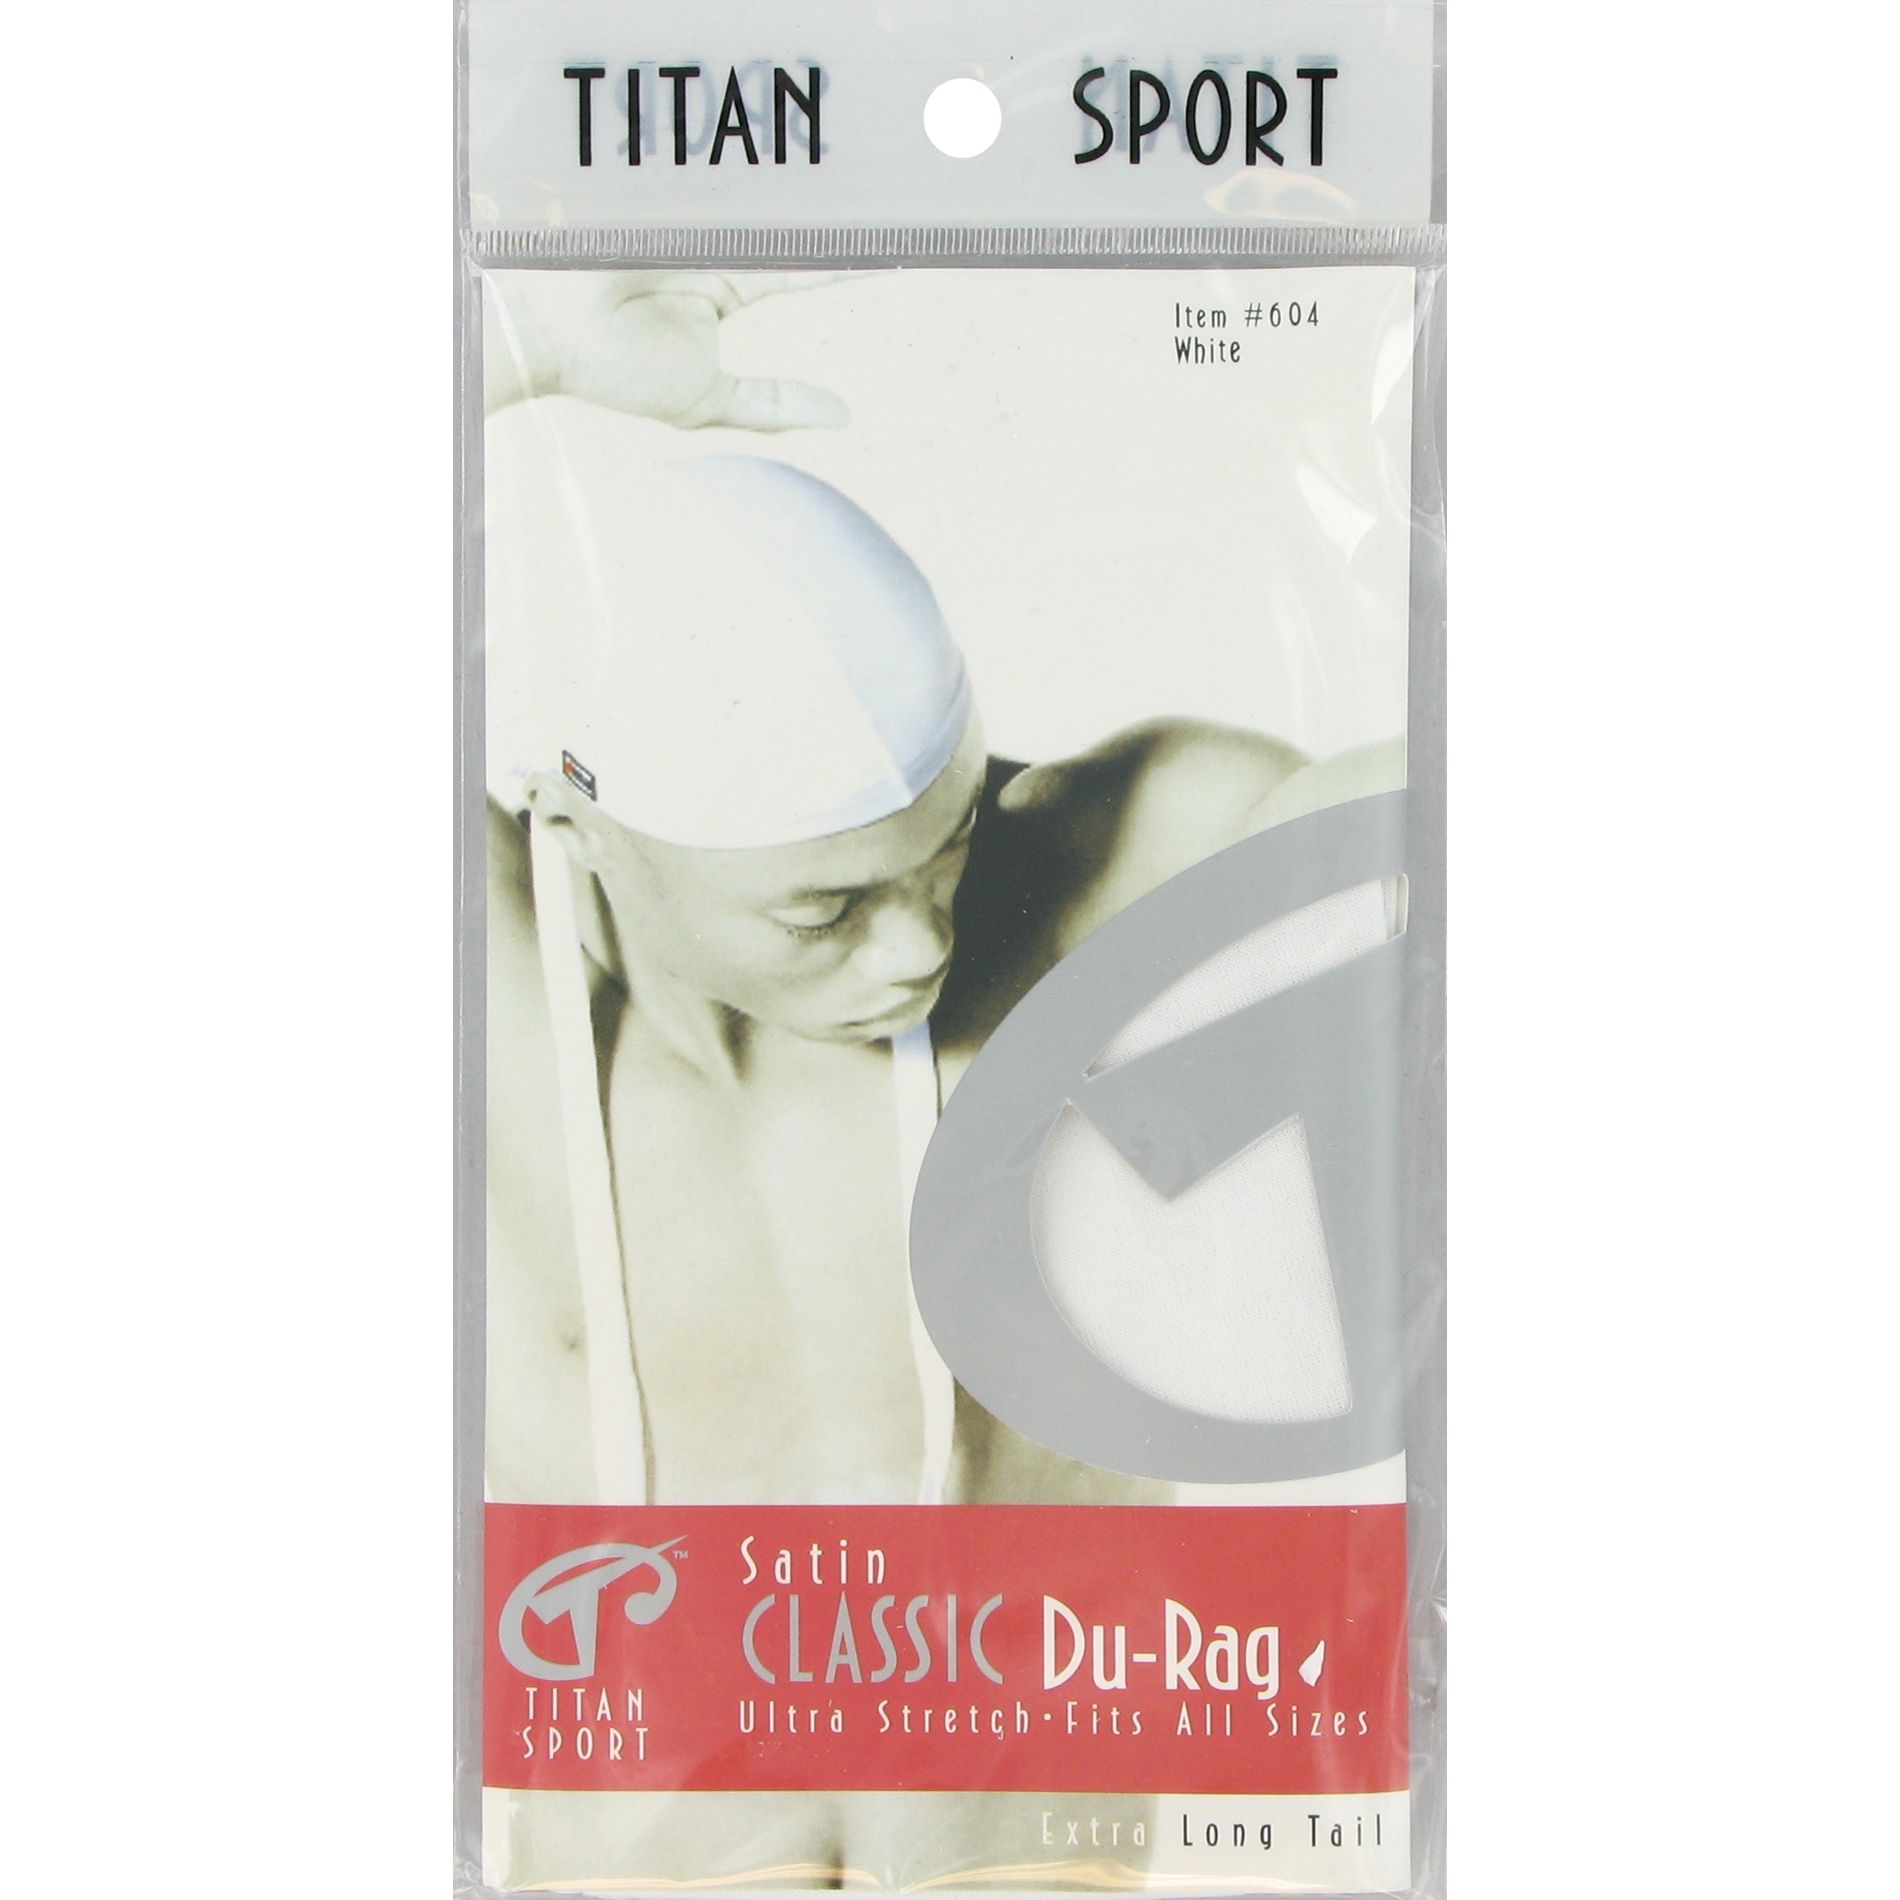 Titan Sports Satin Classic Du-Rag Ultra Stretch Fits All Sizes White